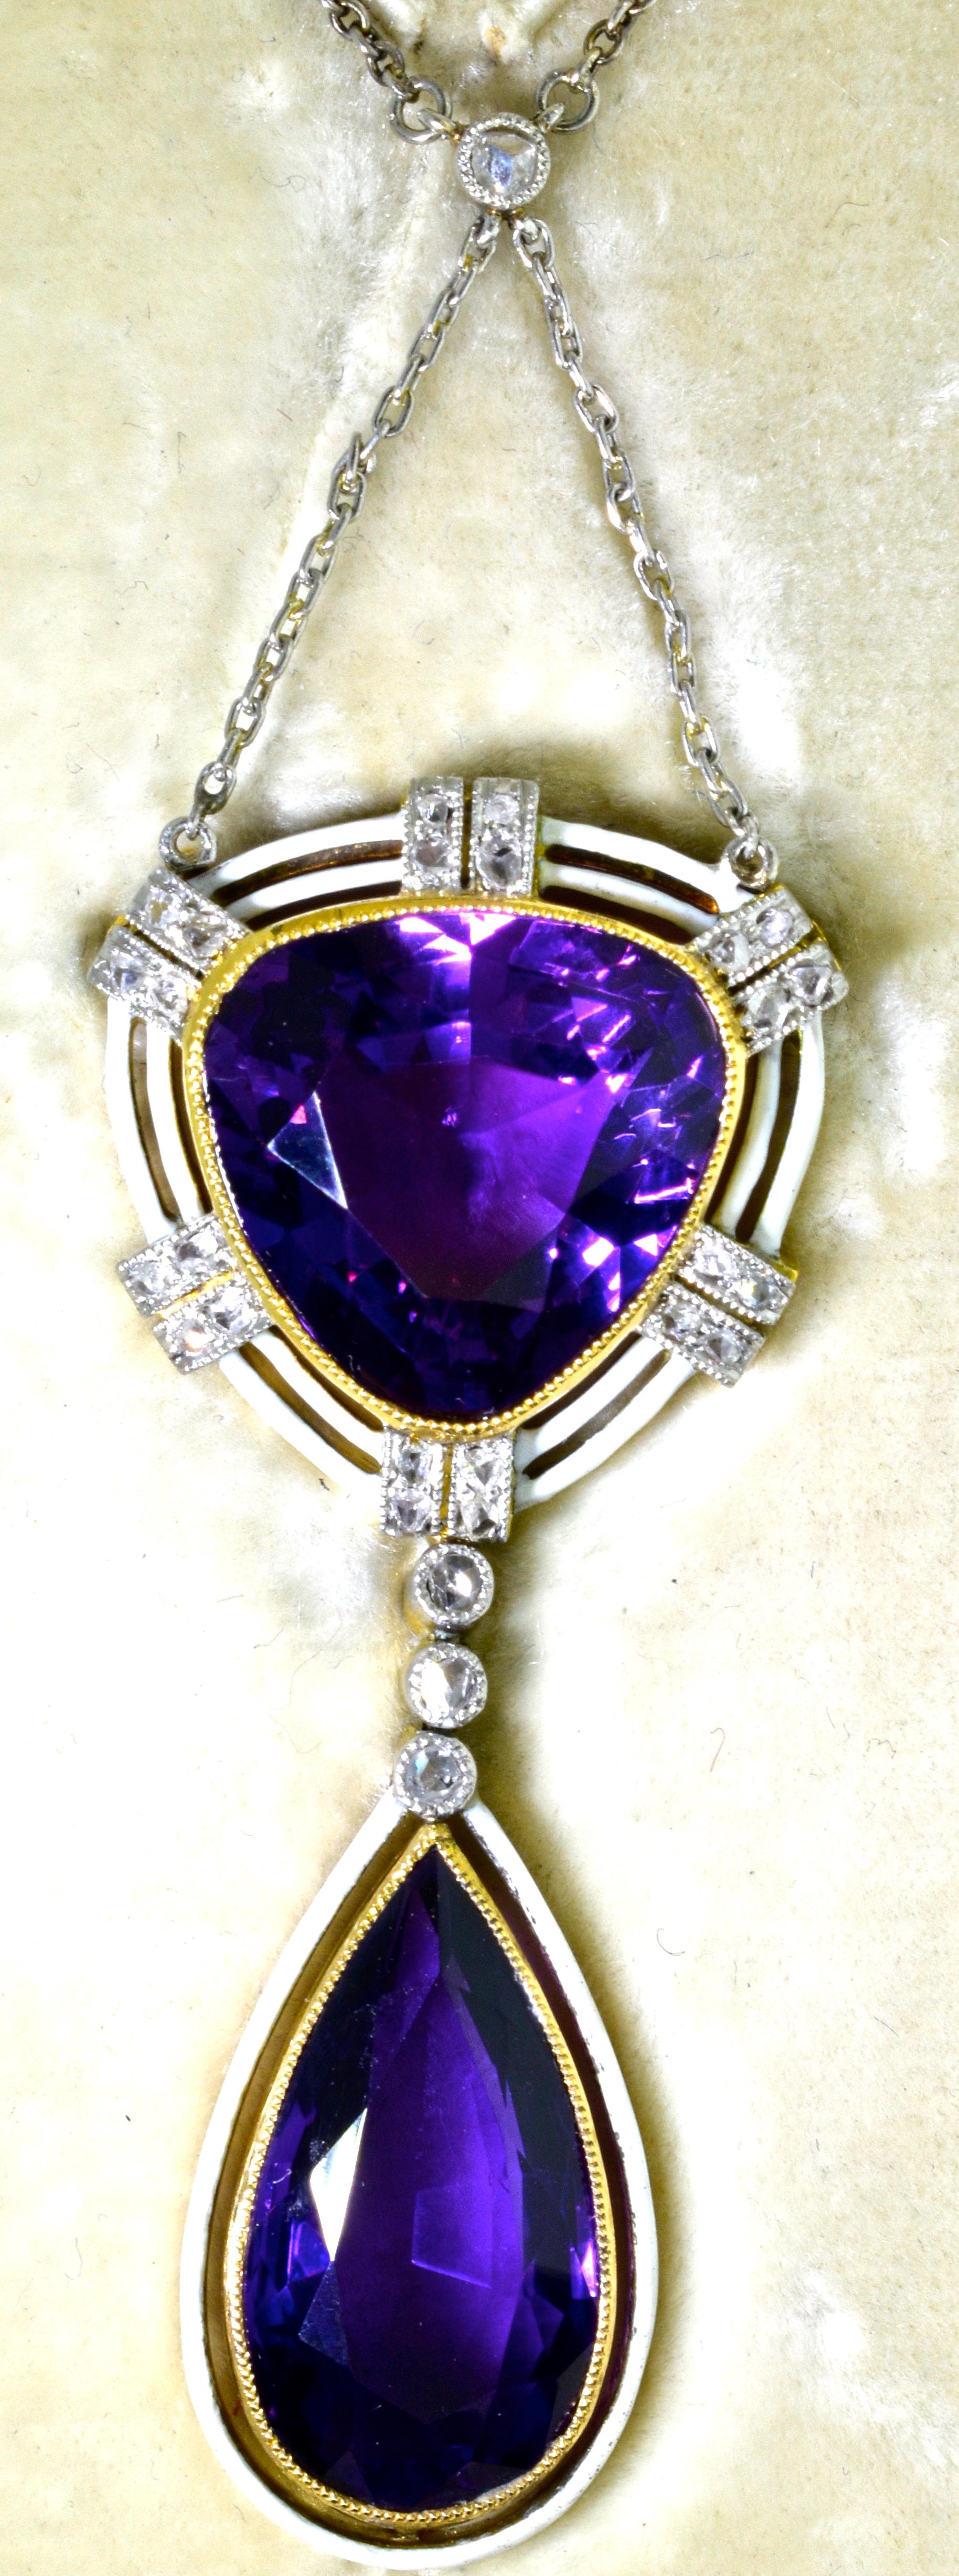 Belle Époque Antique Amethyst, Diamond and Enamel Pendant Necklace, circa 1895